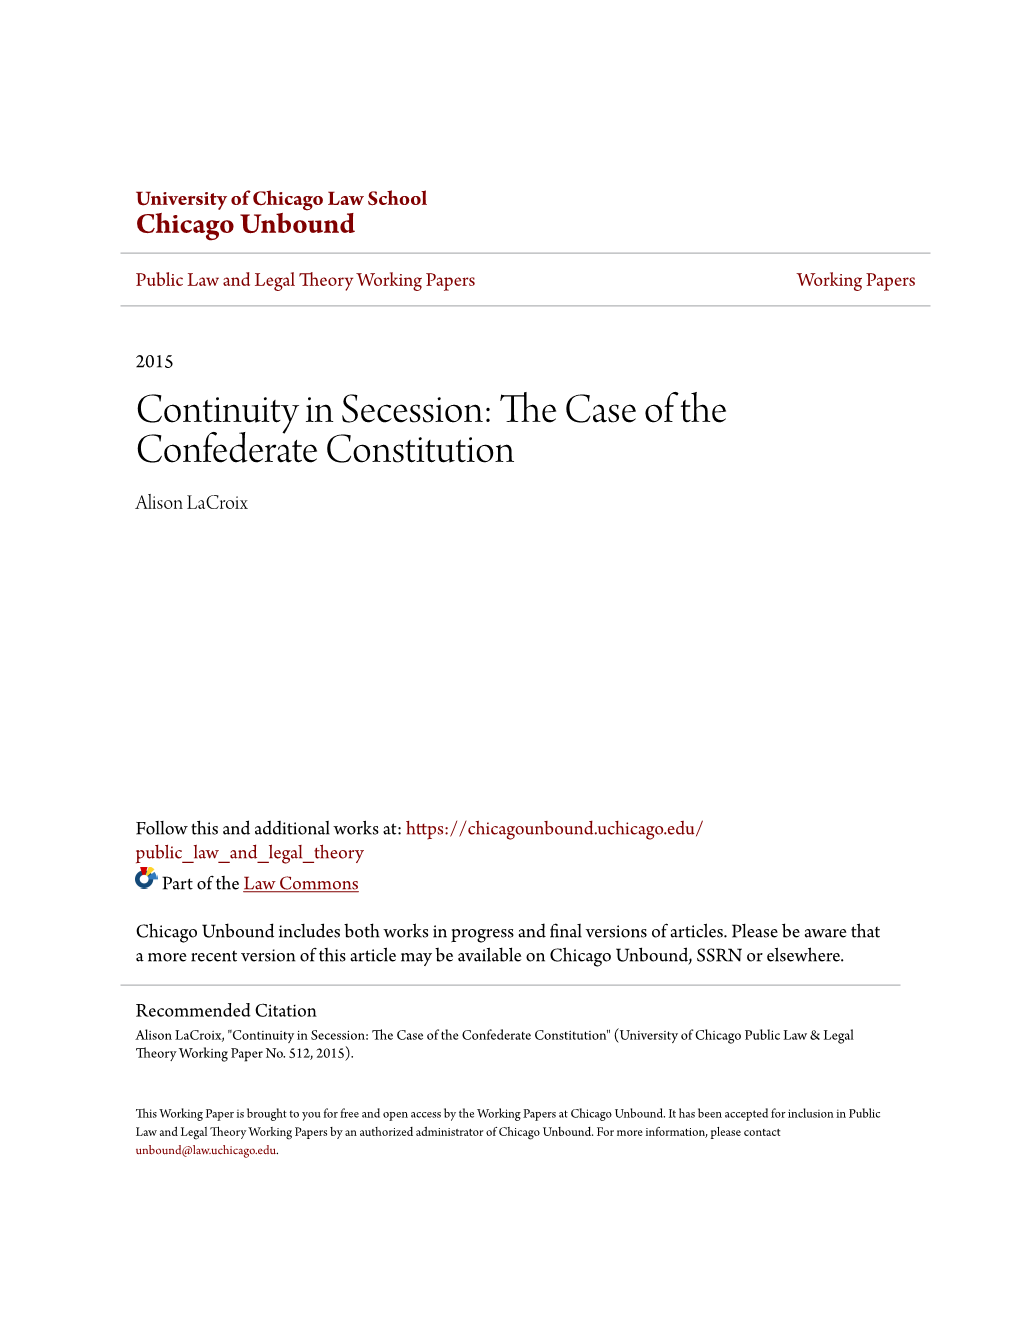 Continuity in Secession: the Case of the Confederate Constitution